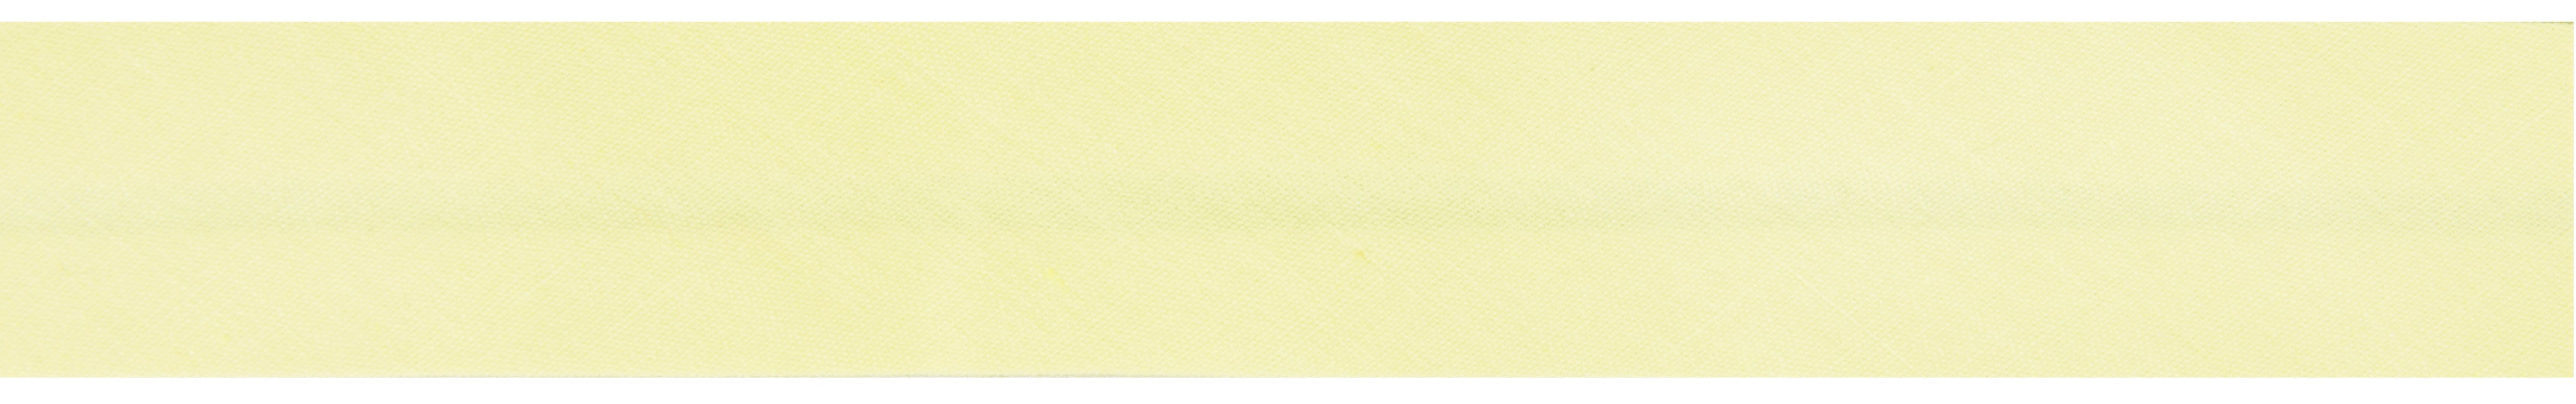 20m roll of Lemon Bias Binding | 25mm width from Jaycotts Sewing Supplies